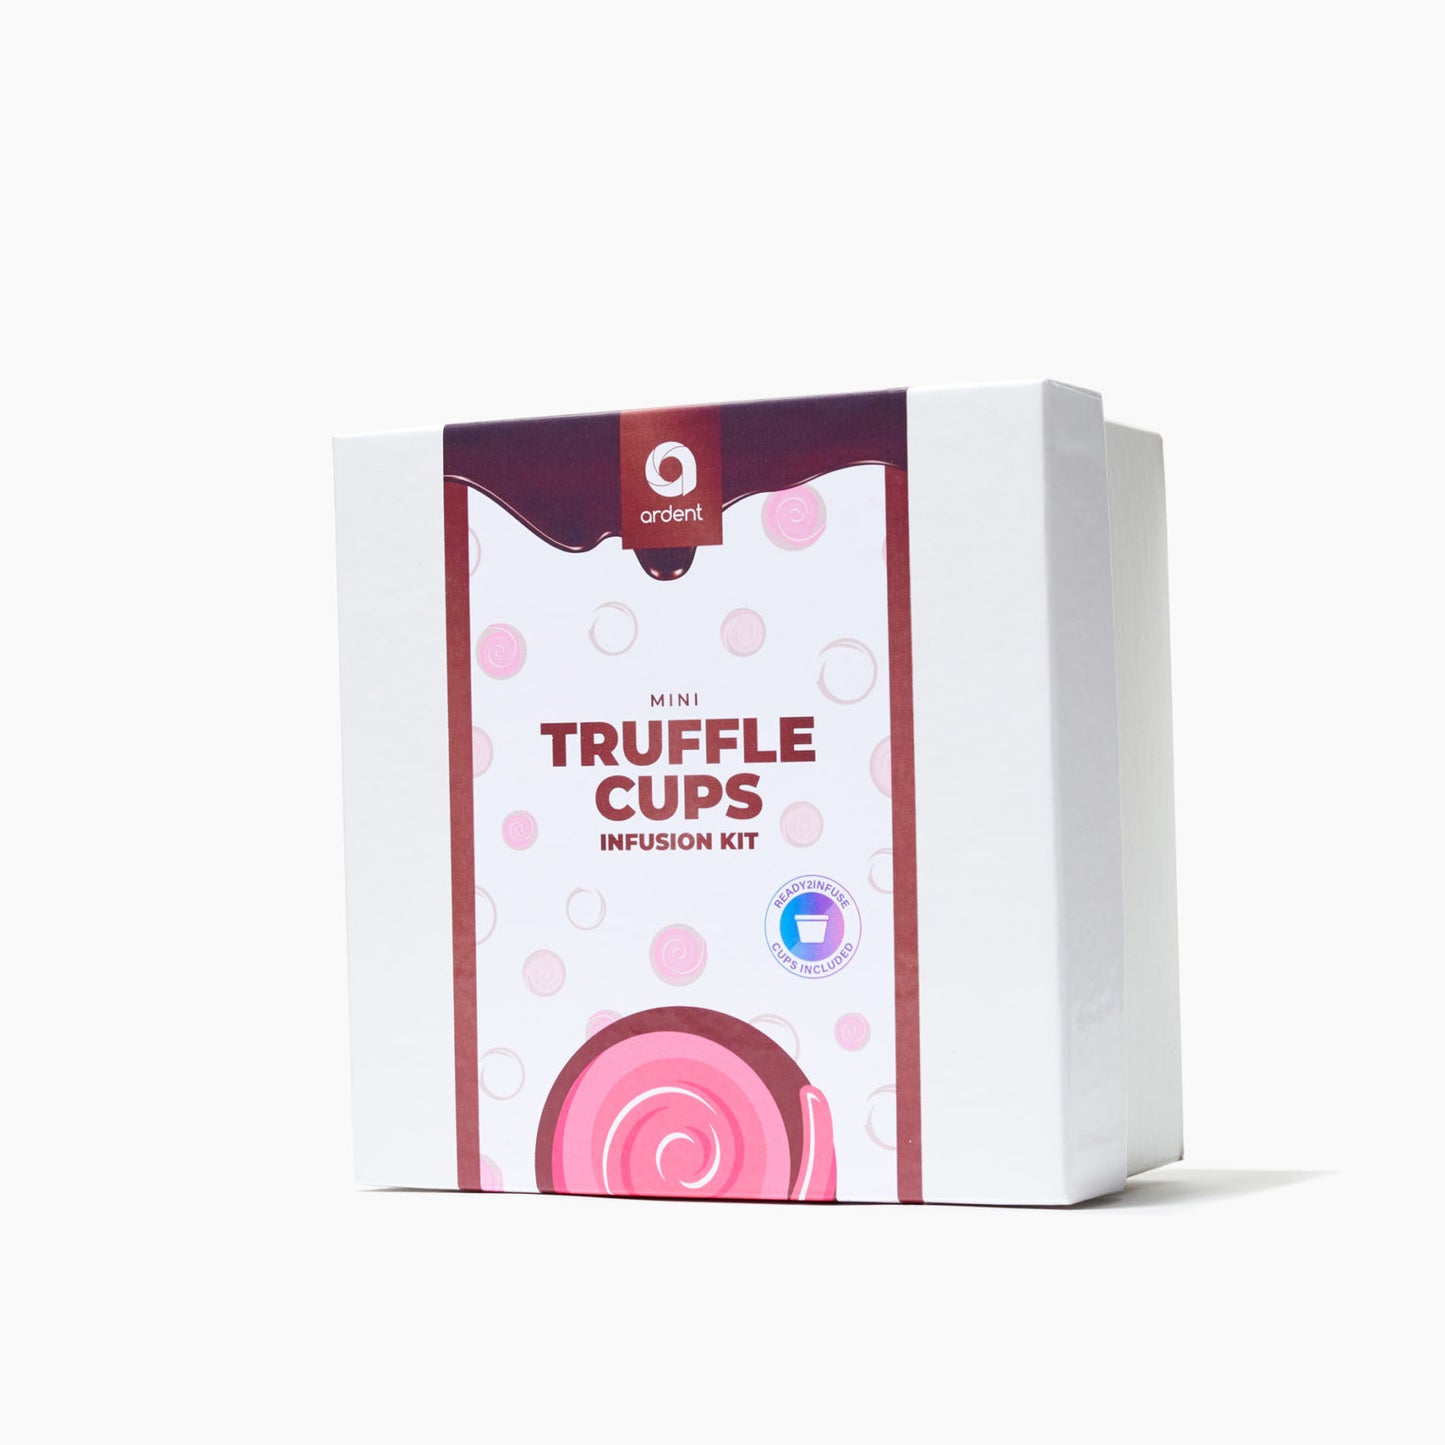 Truffle Cups & FX Double Lifter Bundle